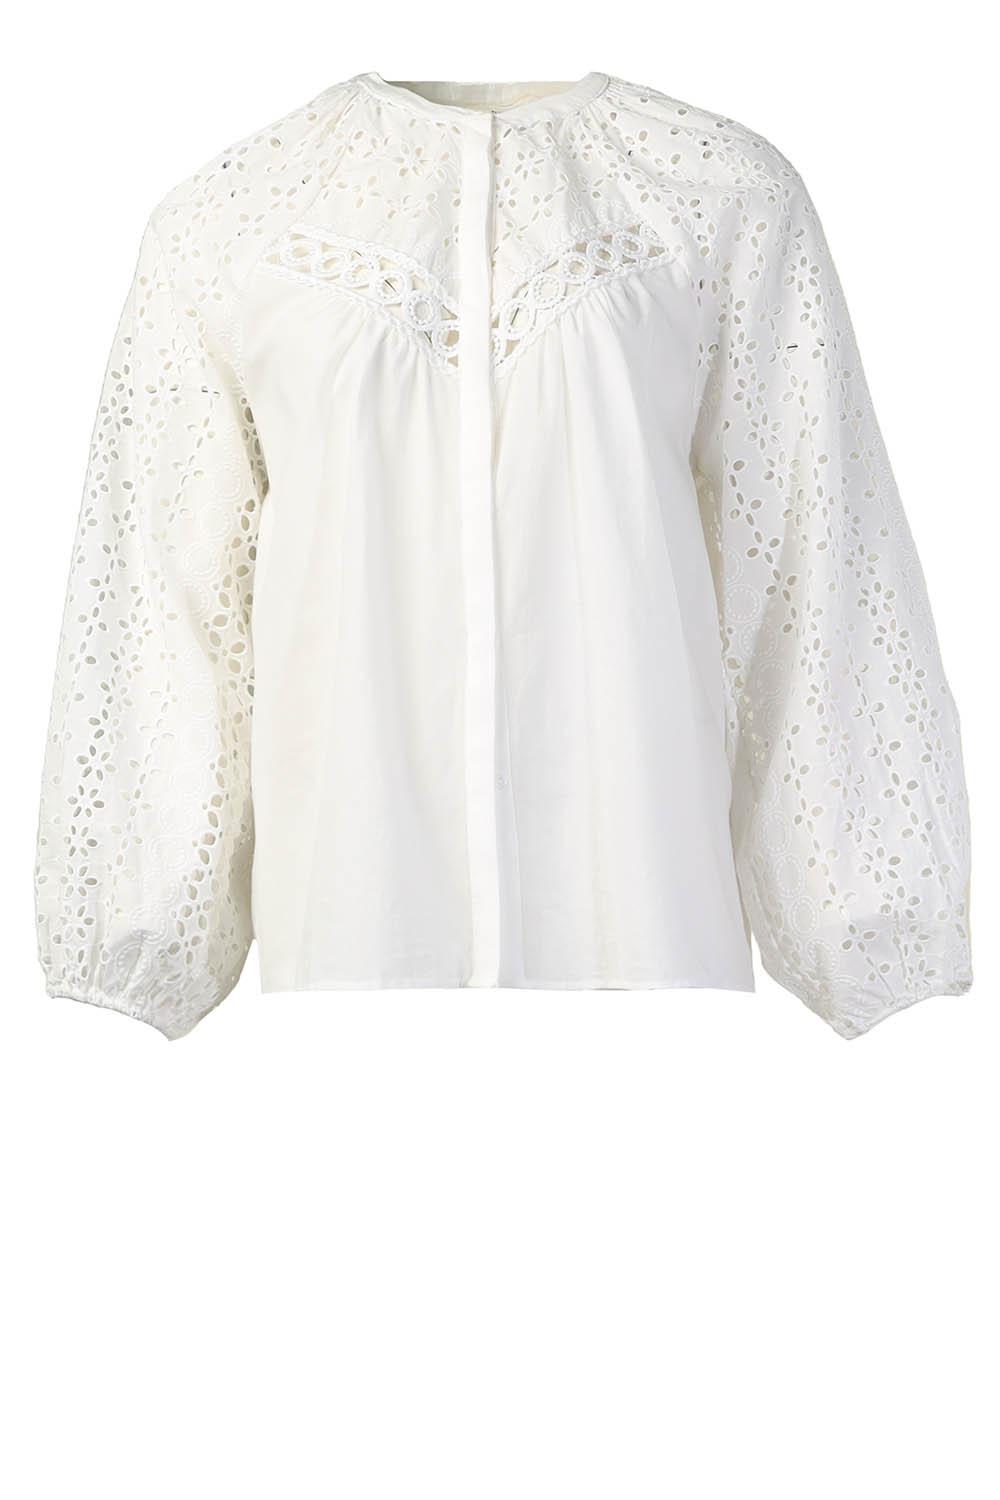 Suncoo Broderie blouse Lovely naturel